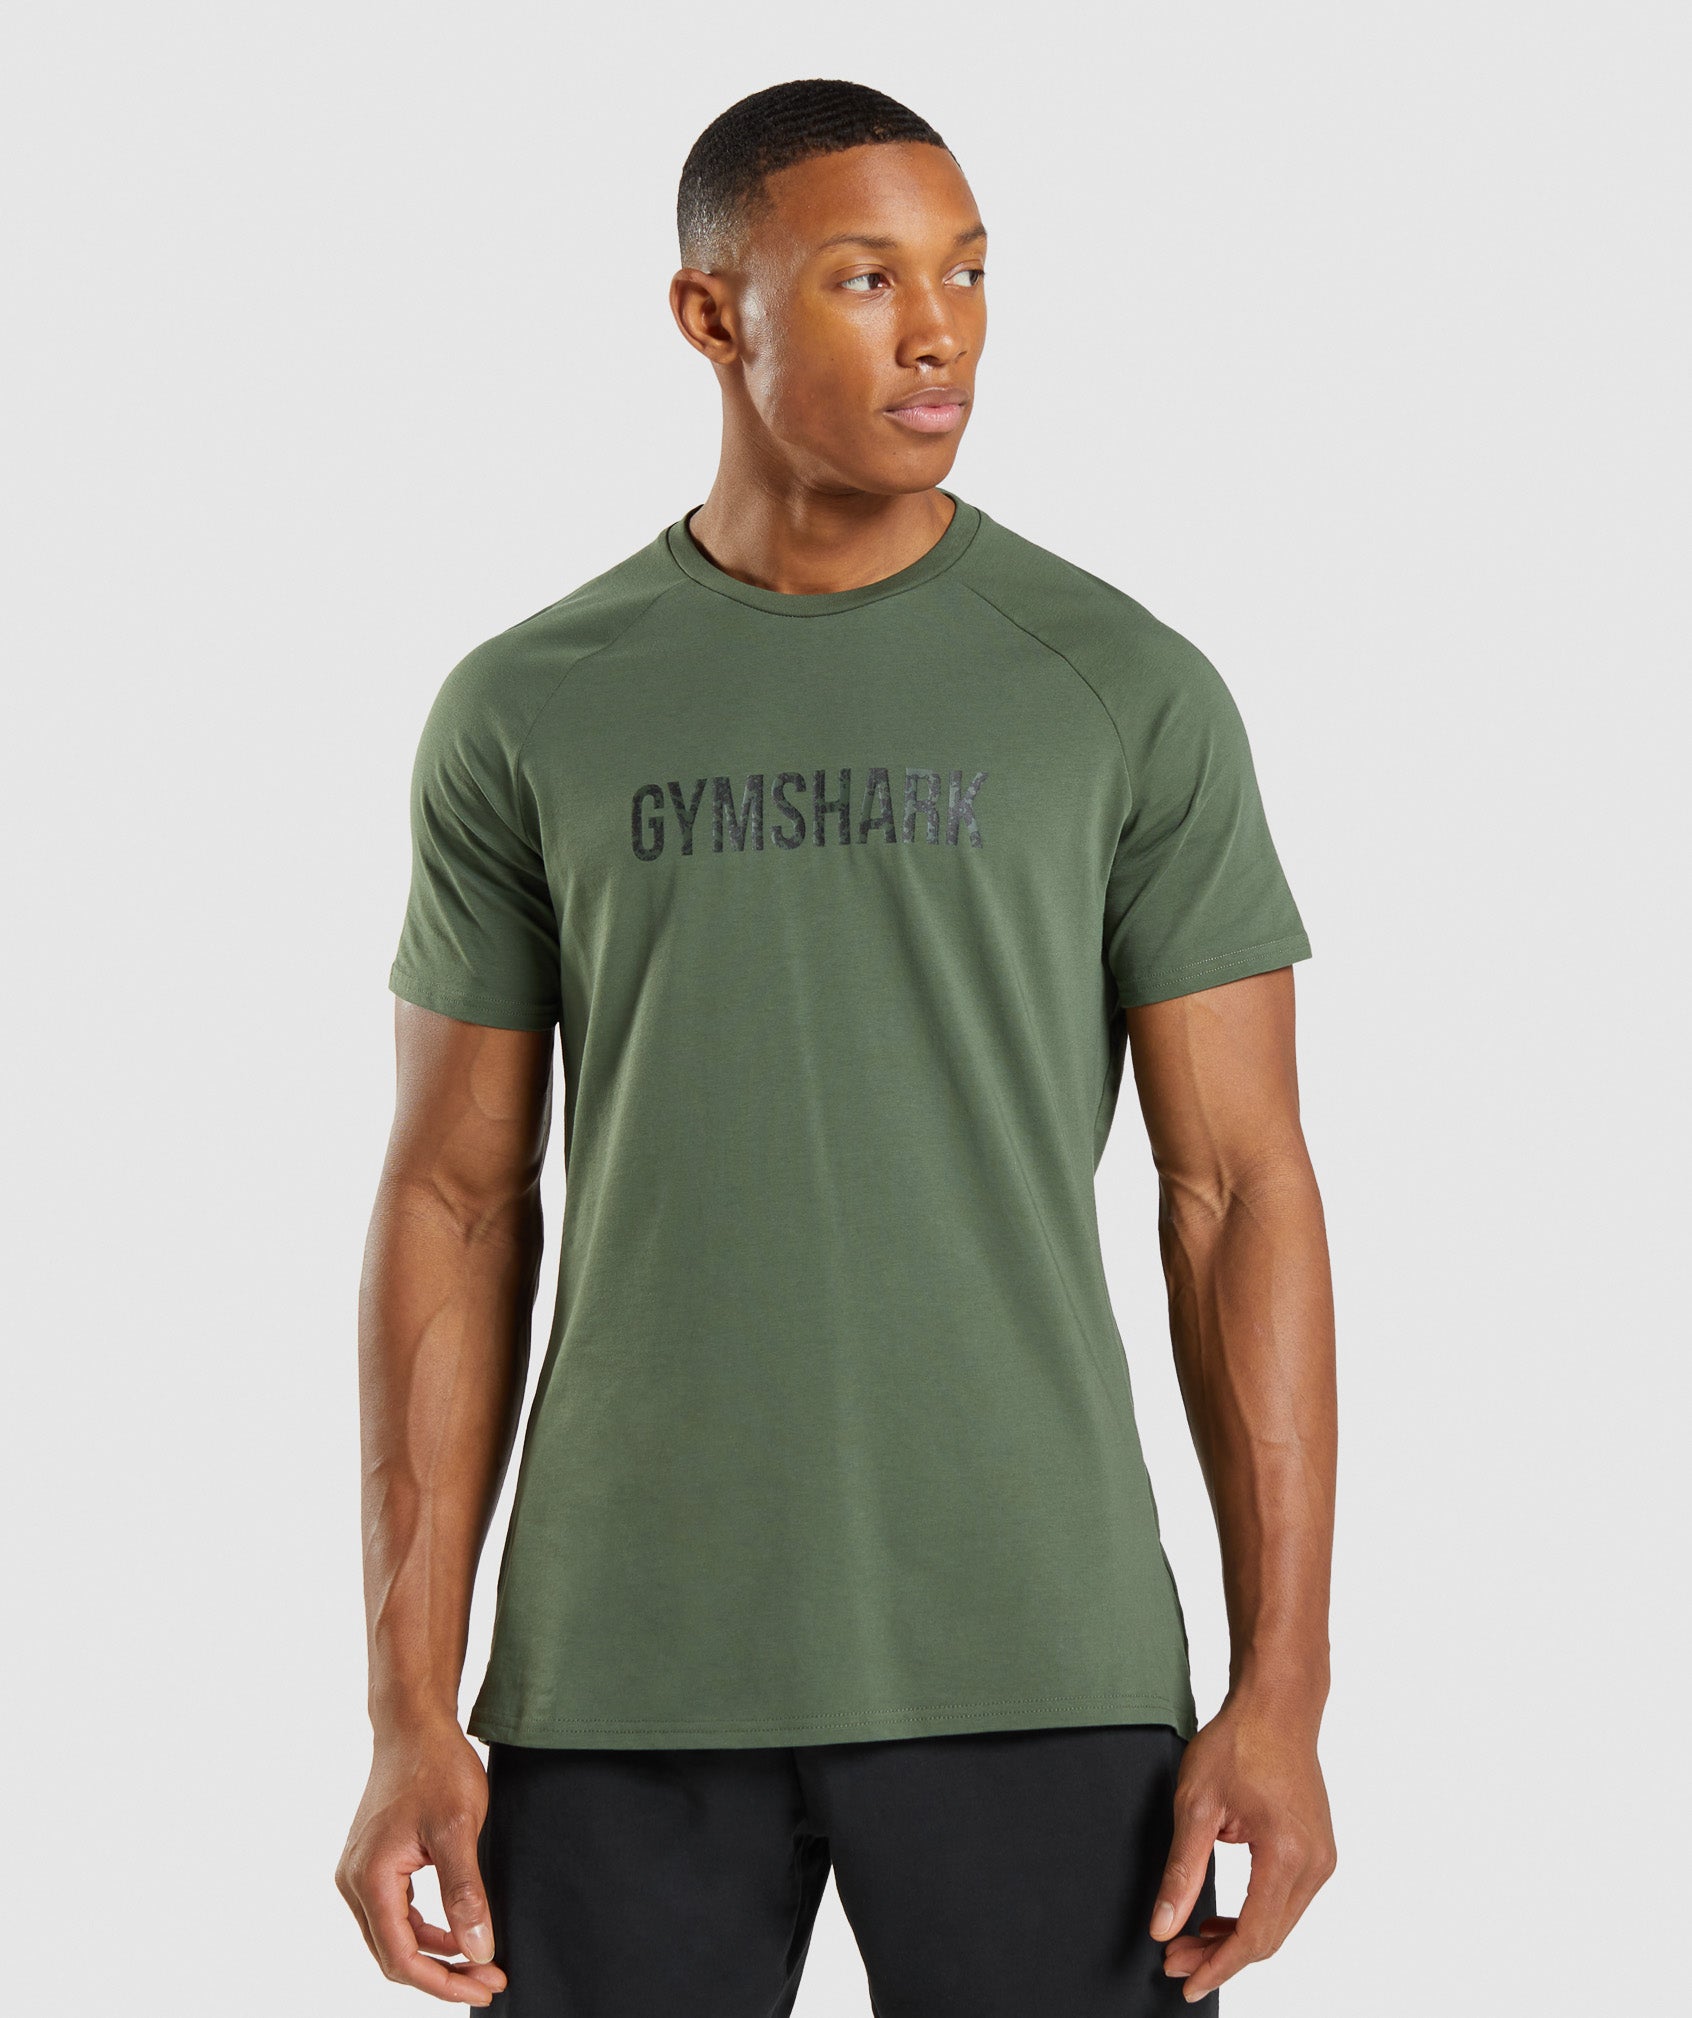 Gymshark Apollo Camo T-Shirt - Camo Green | Gymshark